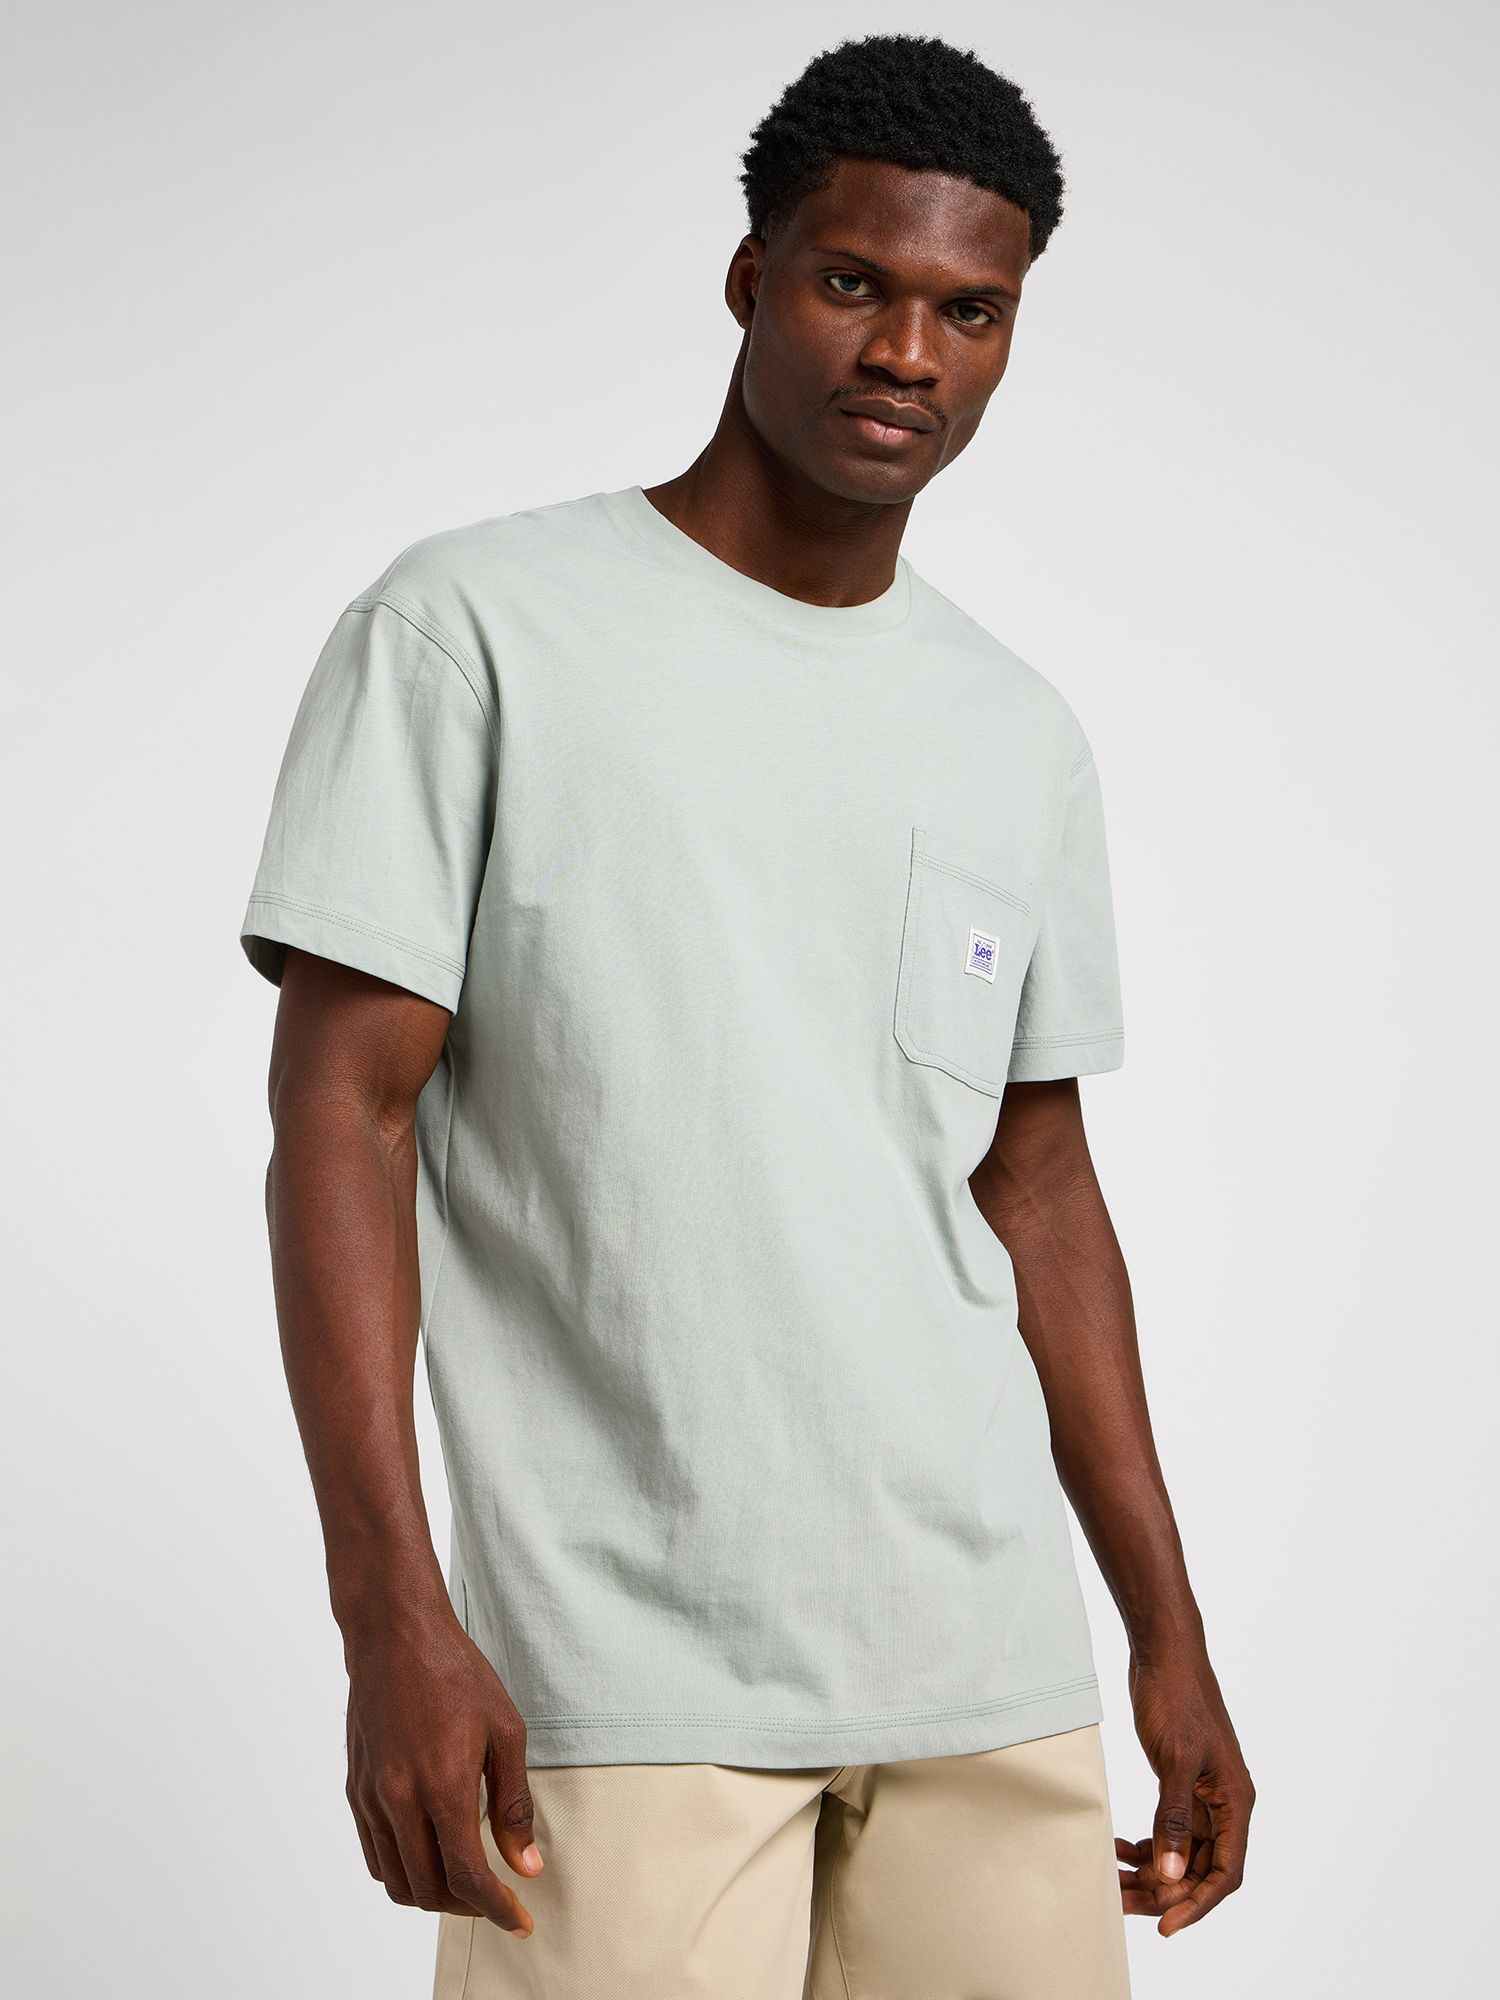 Lee Workwear Pocket T-Shirt, Intuition Grey, XL